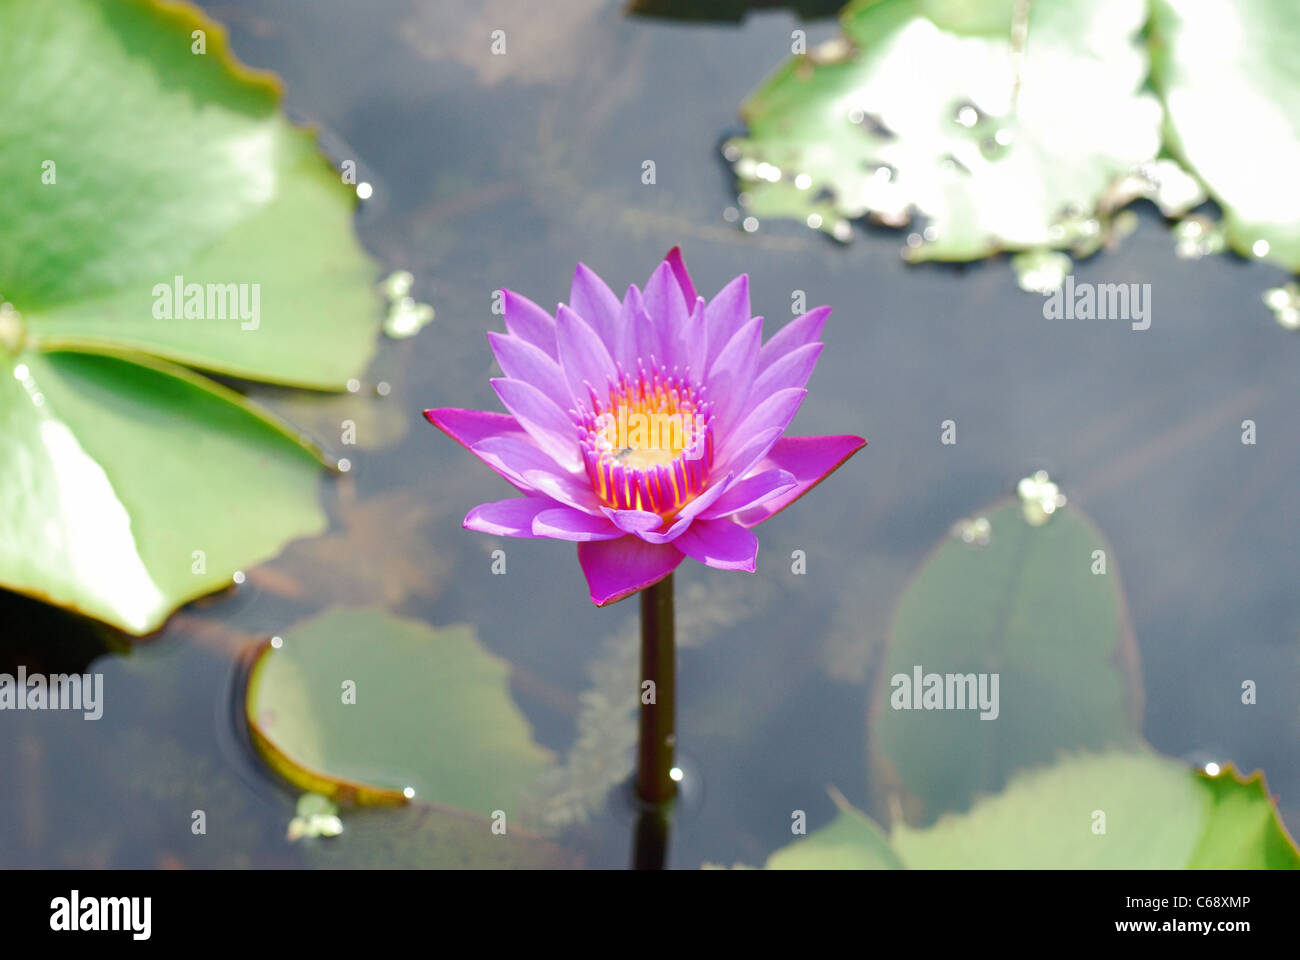 Lila Lotus, Heilige Lotus Nelumbo Nucifera Familie: Nelumbonaceae. Lotus ist die nationale Blume von Indien. Bhubaneswar, Bundesstaat Orissa, Indien Stockfoto